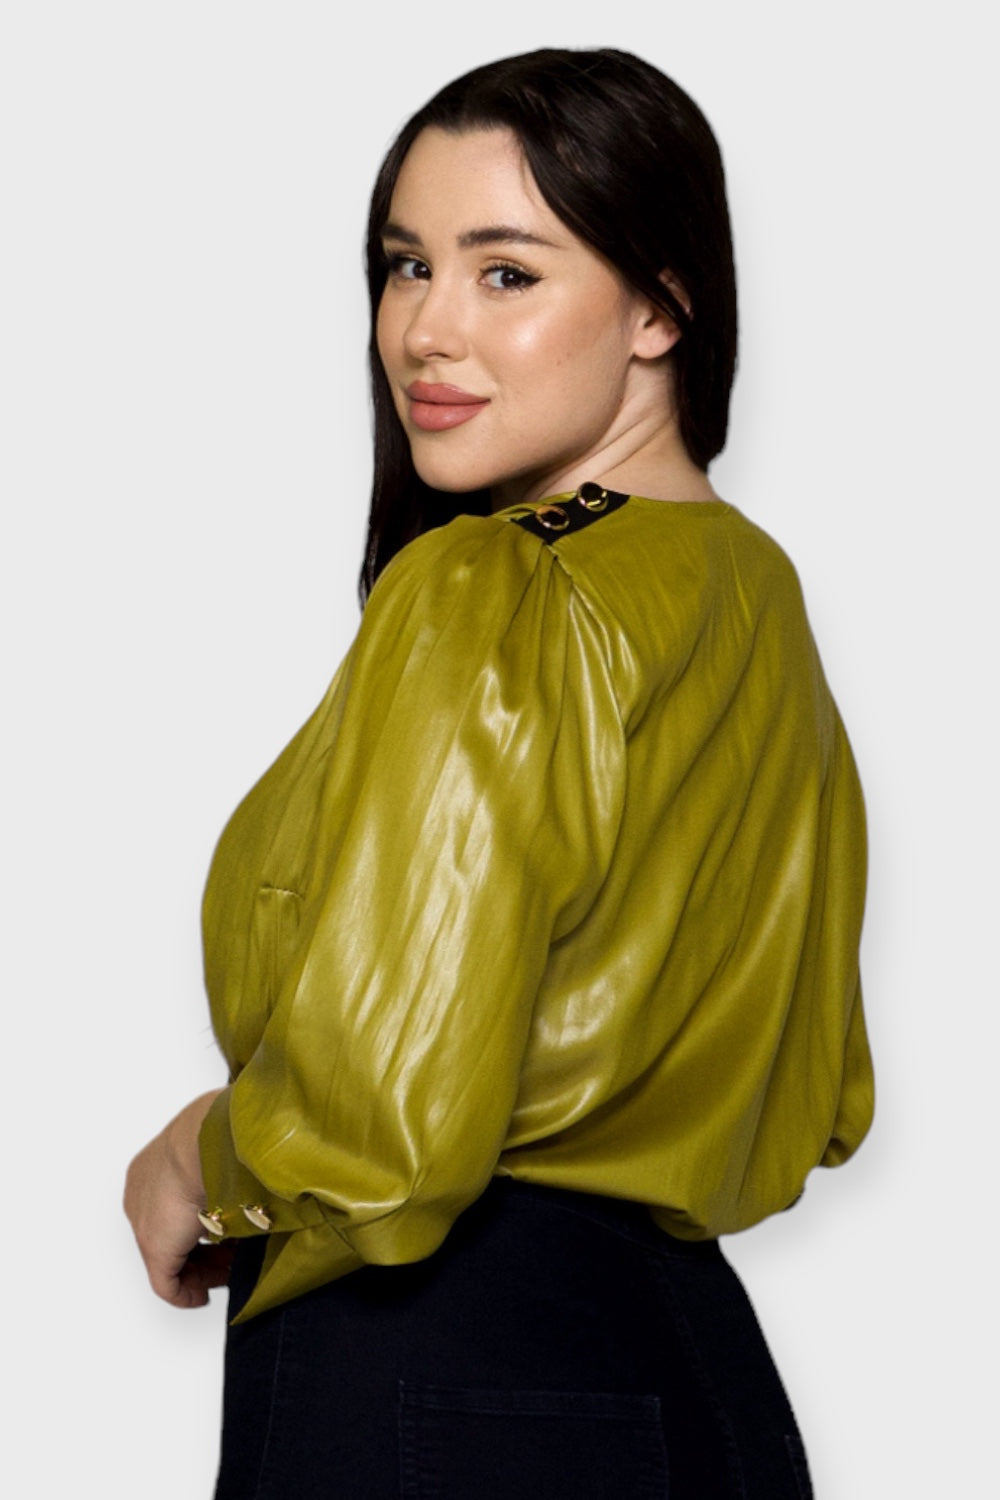 Plus Size Nicia Green and Gold Wrap Blouse Bodysuit by AnnaCristy Milano Italian Women's Clothing